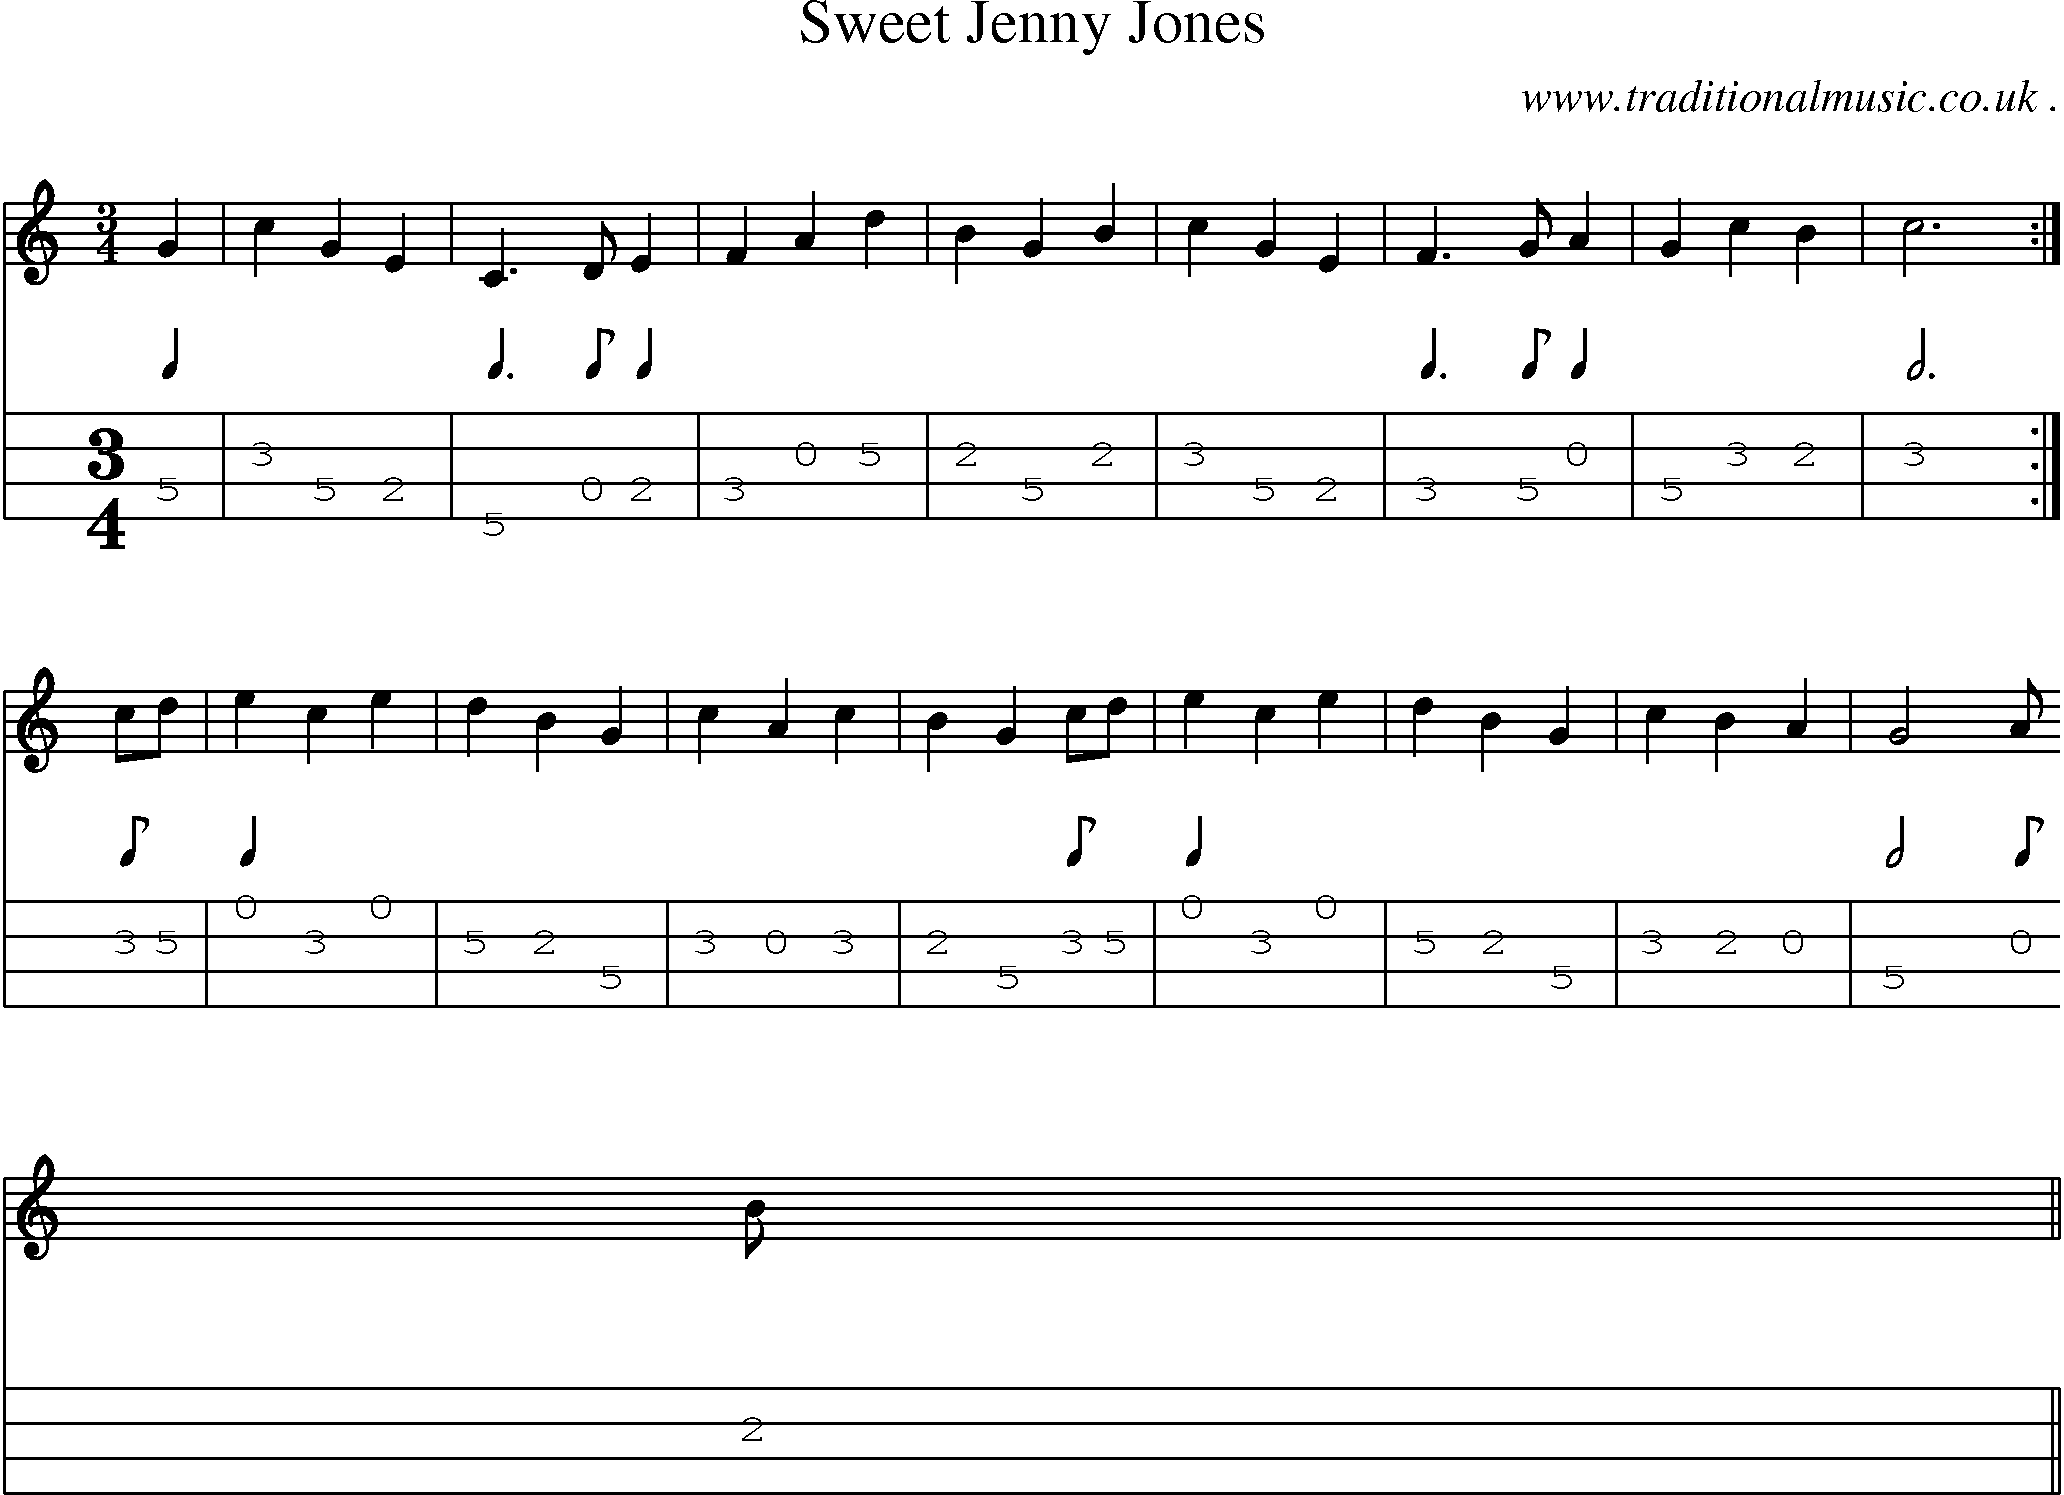 Sheet-Music and Mandolin Tabs for Sweet Jenny Jones